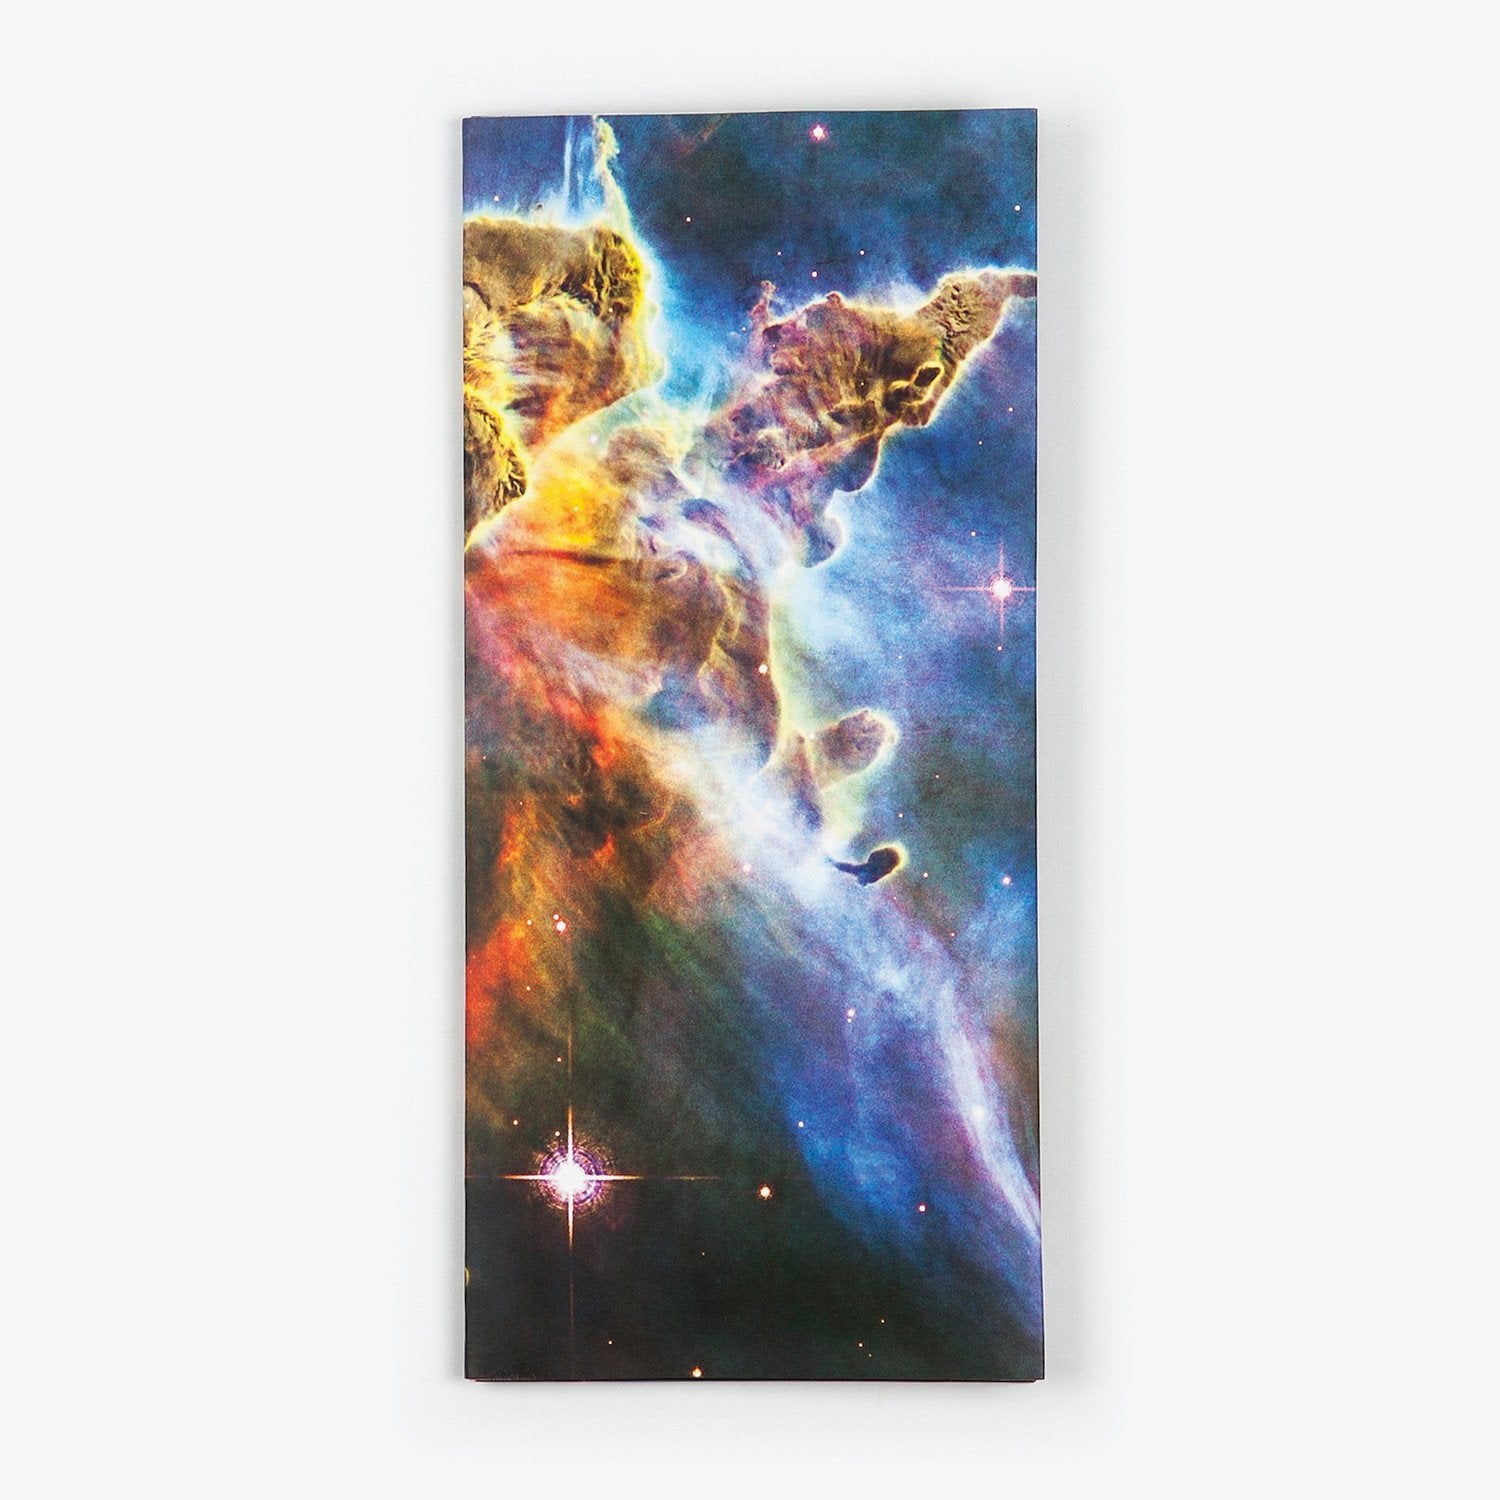 Nebula Travel Wallet - The Walart - Paper Wallet